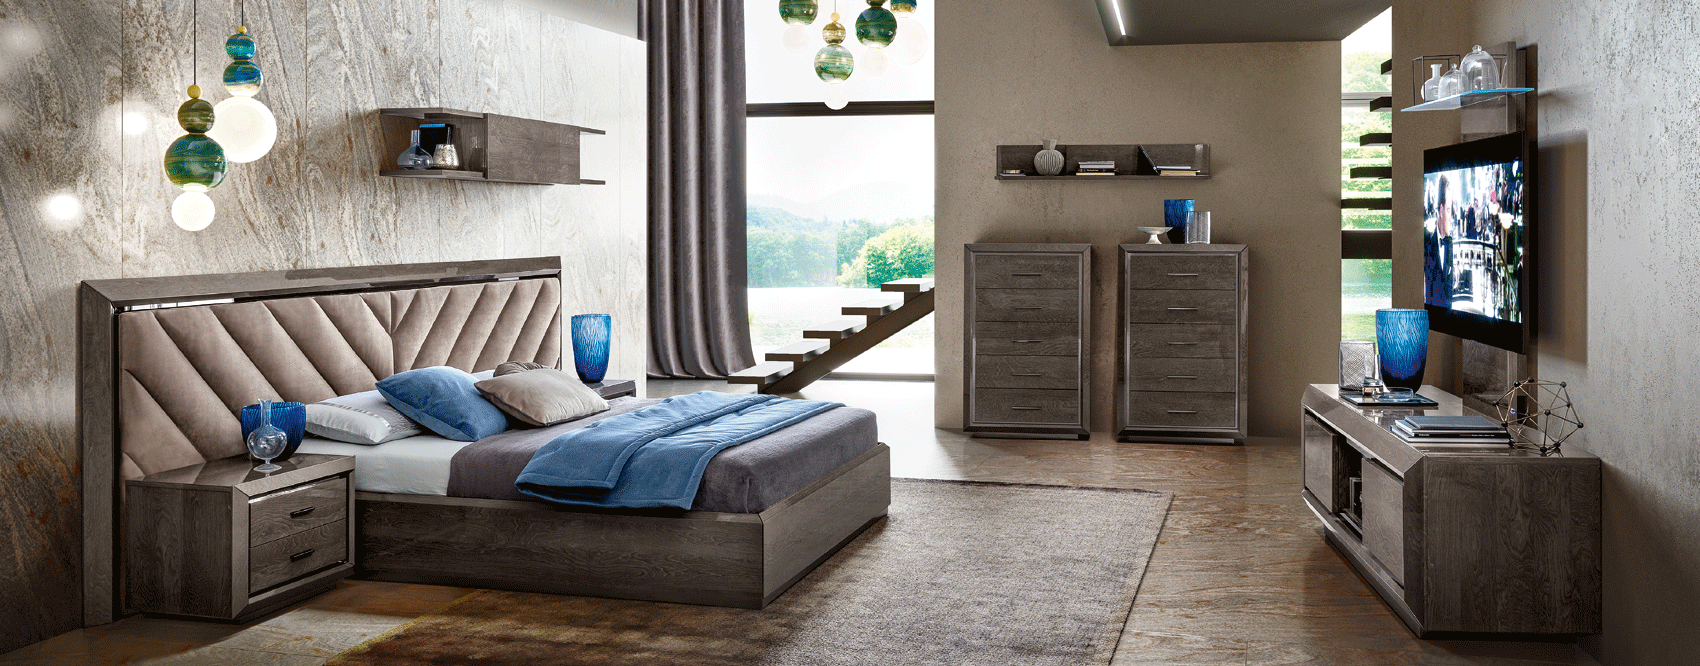 Bedroom Furniture Mirrors Elite Night "BOISERIE" Additional Items